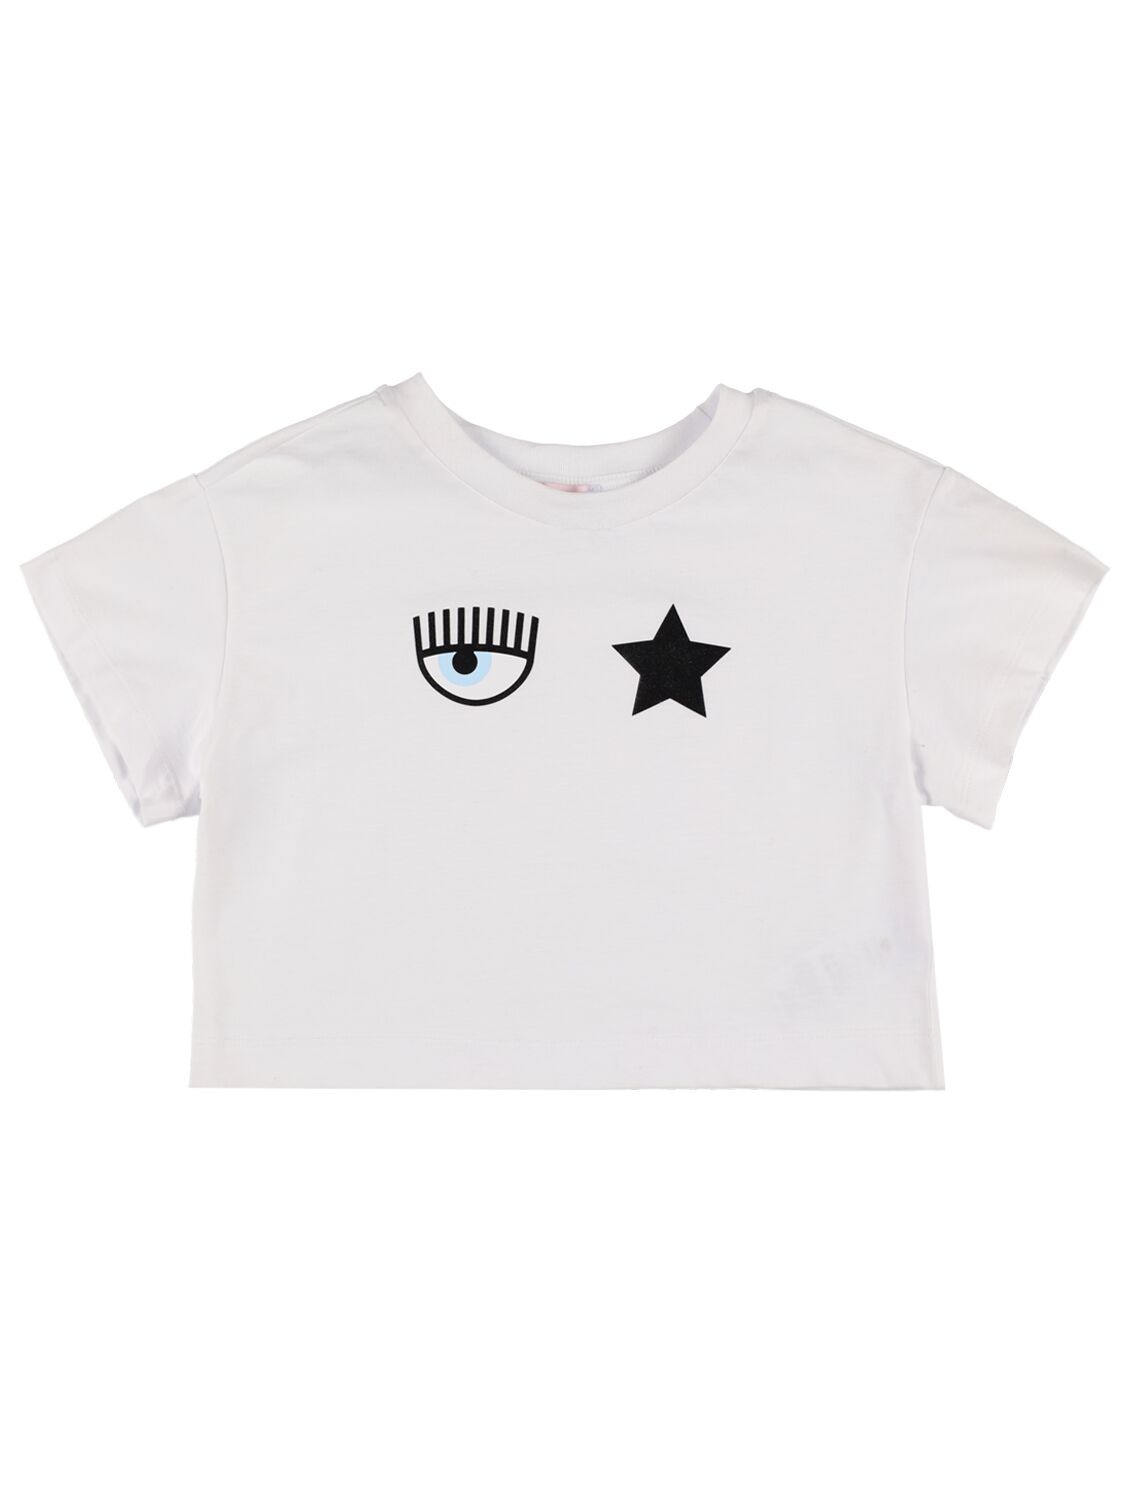 Eye & Star Cropped Cotton Jersey T-shirt